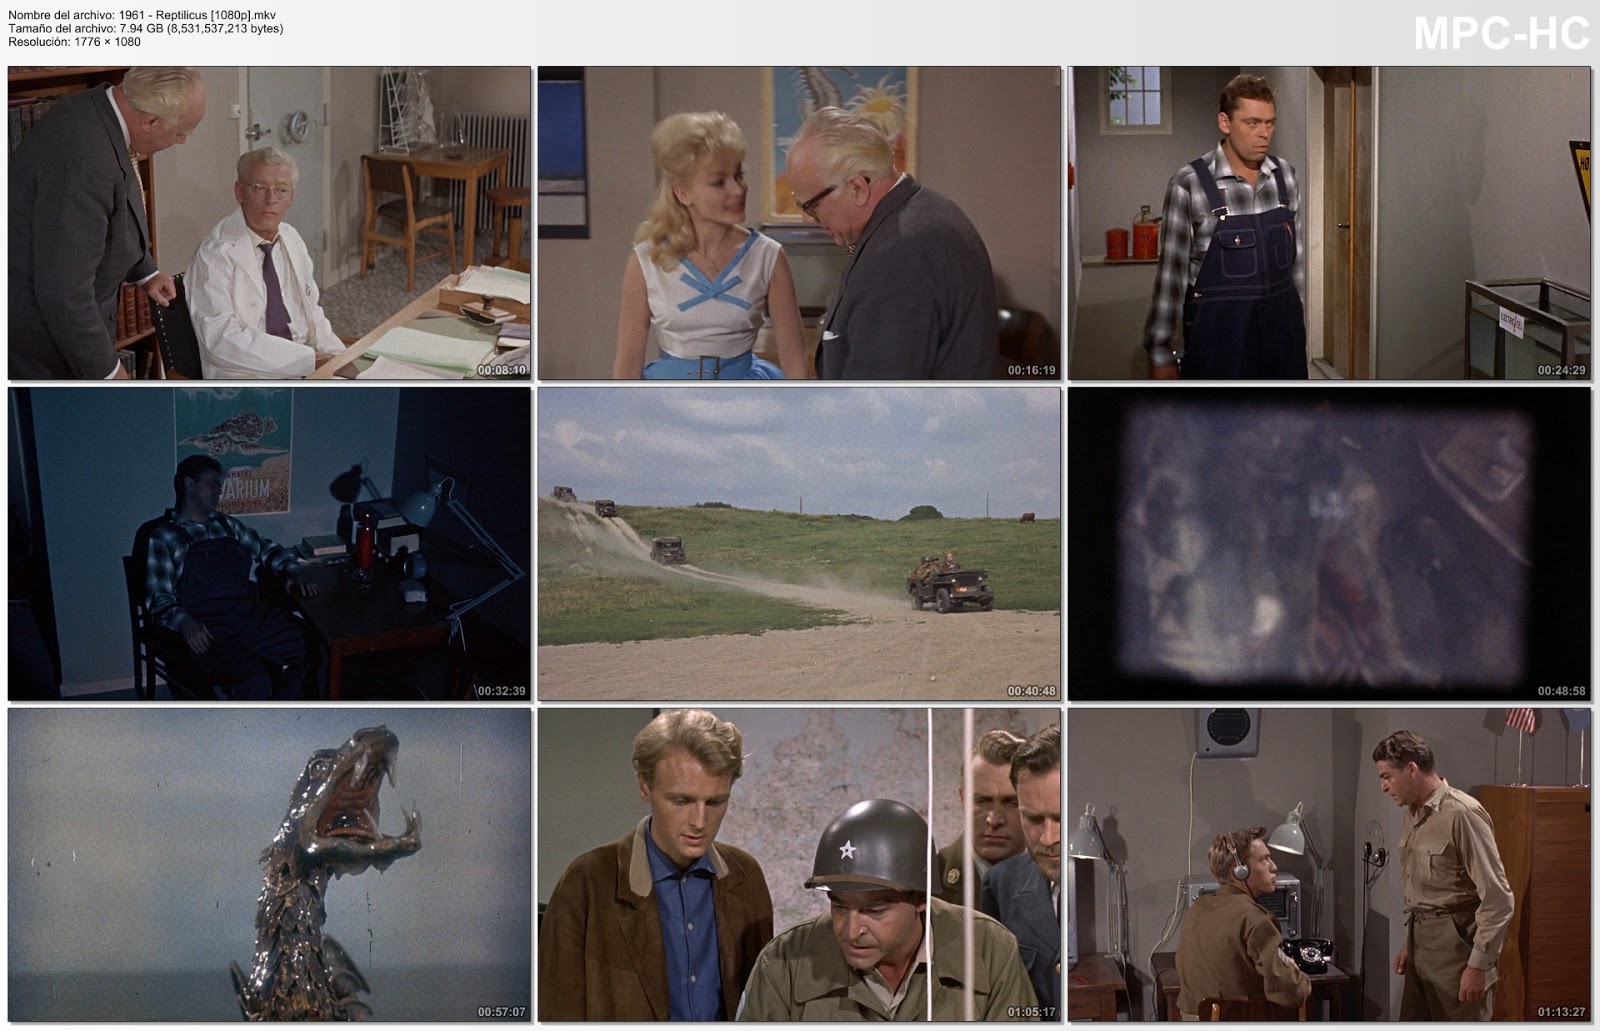 Reptilicus (1961)|1080p|Mega|cine de mounstro